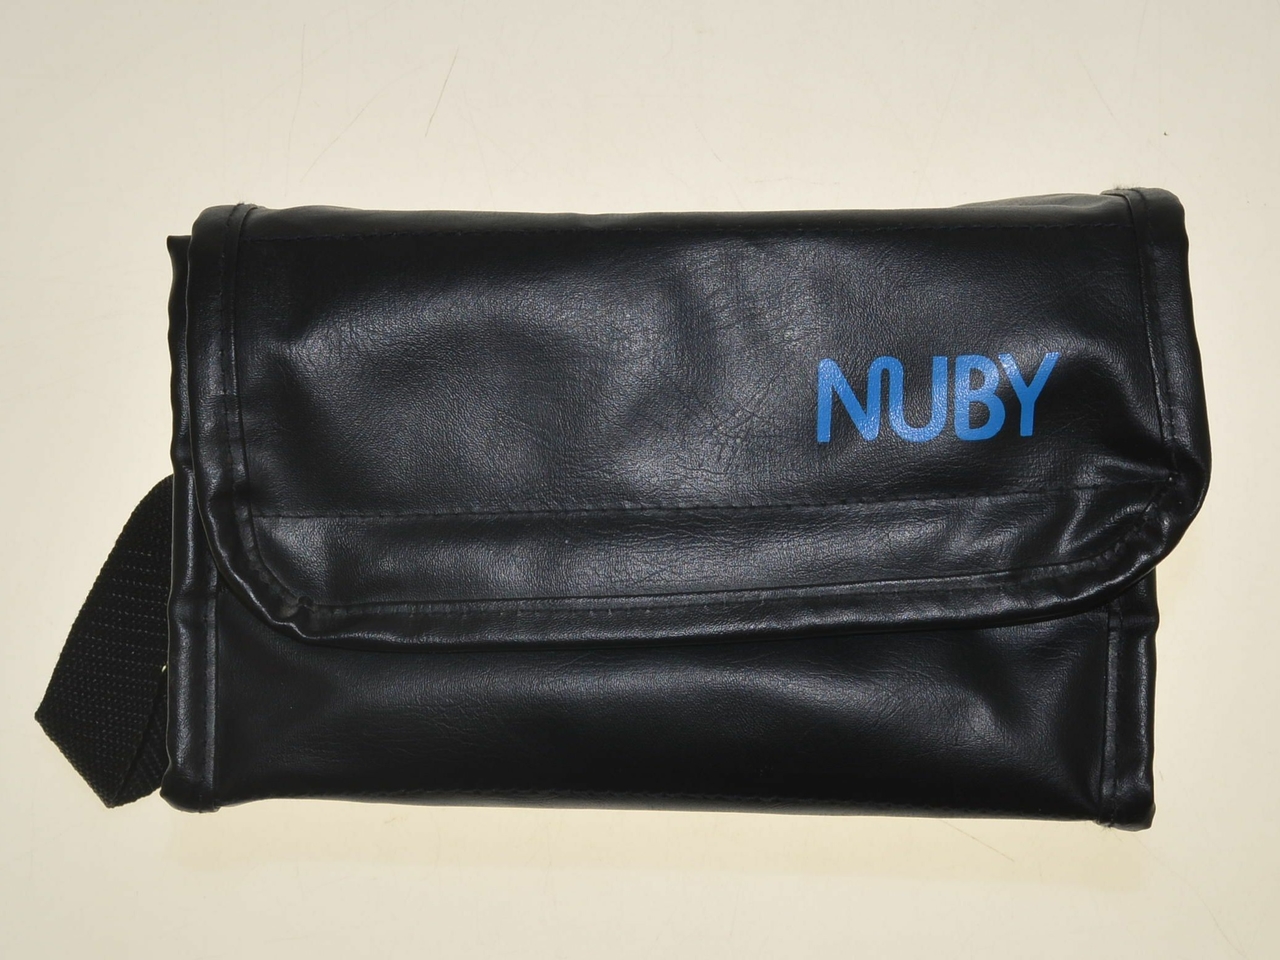 Nuby Travel Bag voor Super Nintendo - Super Nintendo Hardware